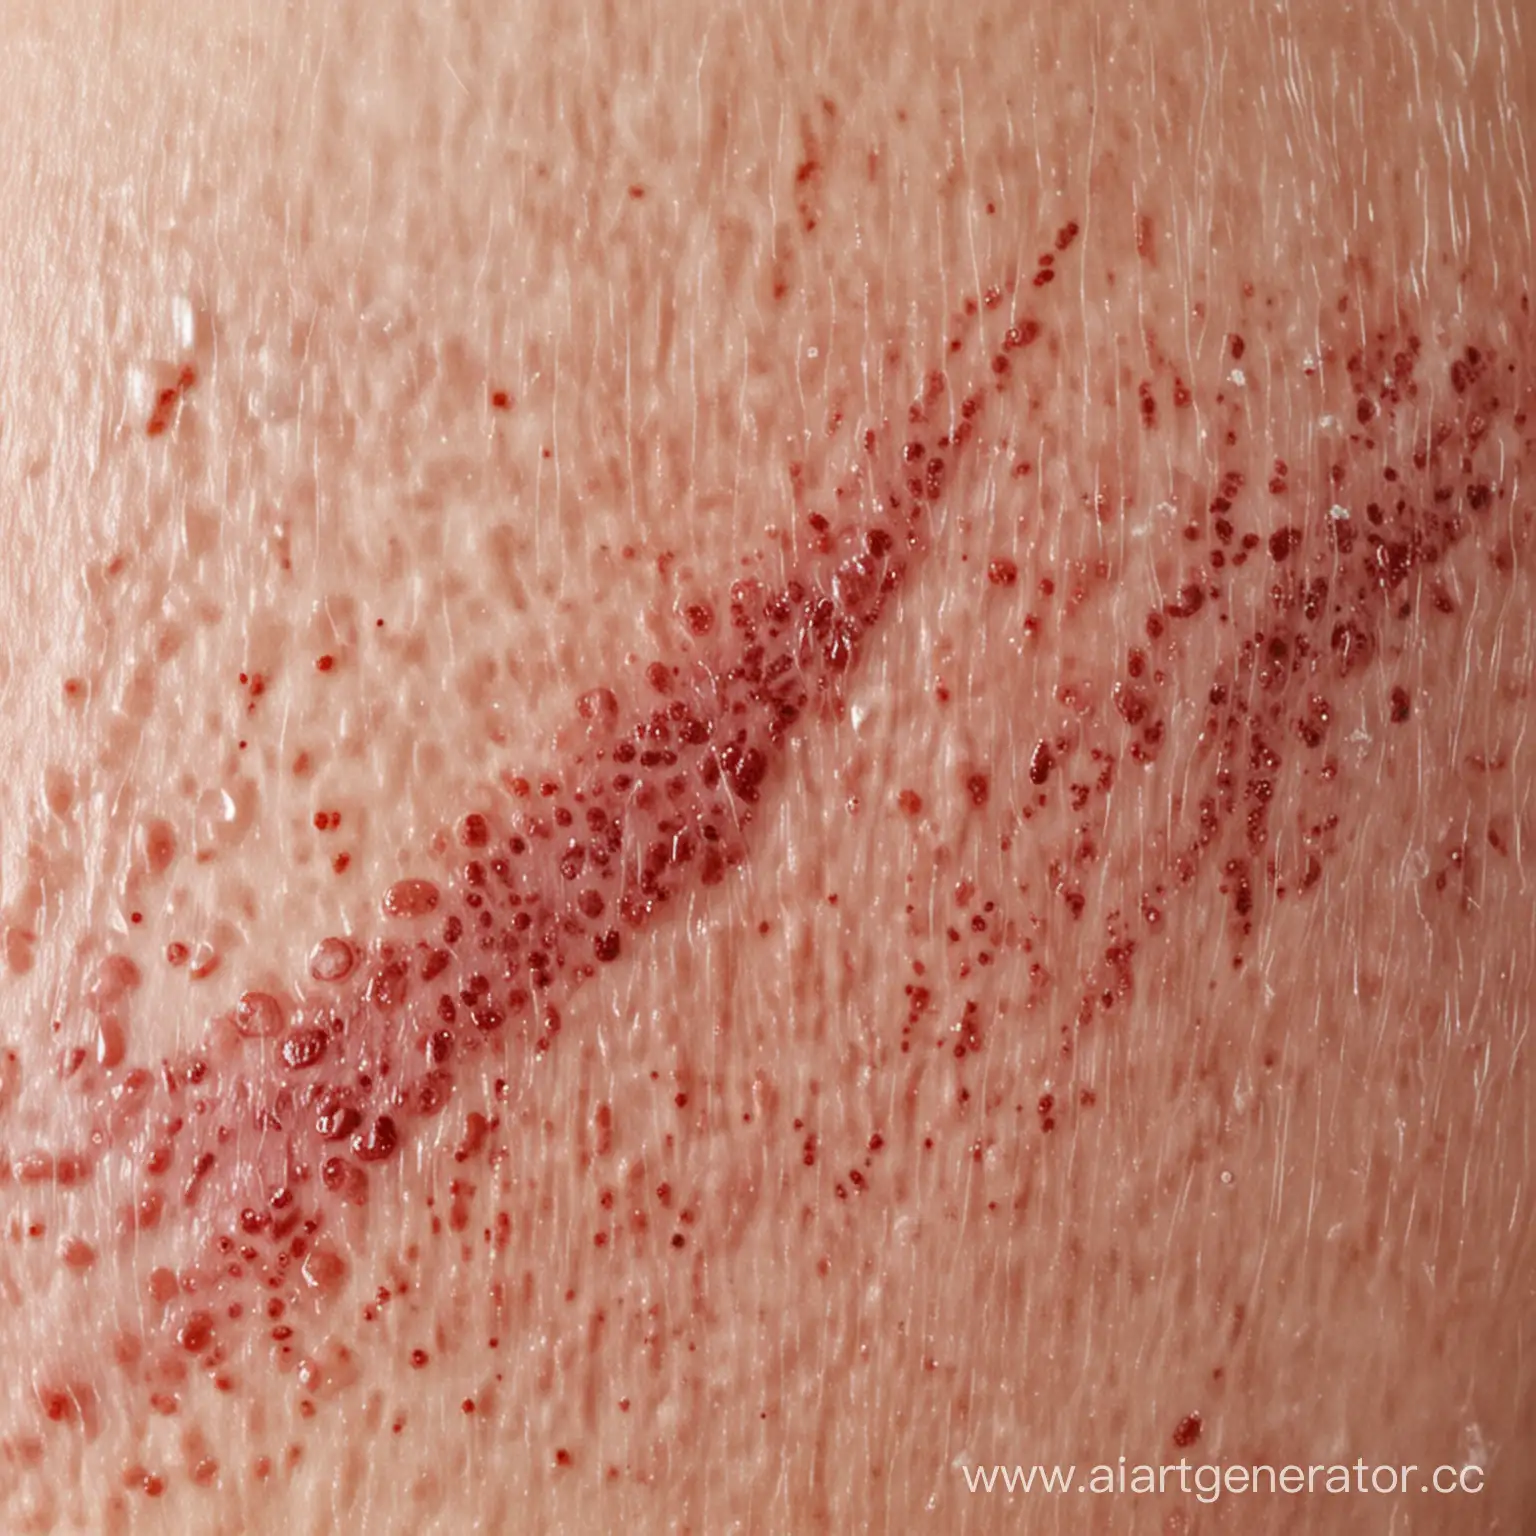 Psoriasis-Skin-Condition-CloseUp-View-of-Affected-Human-Skin